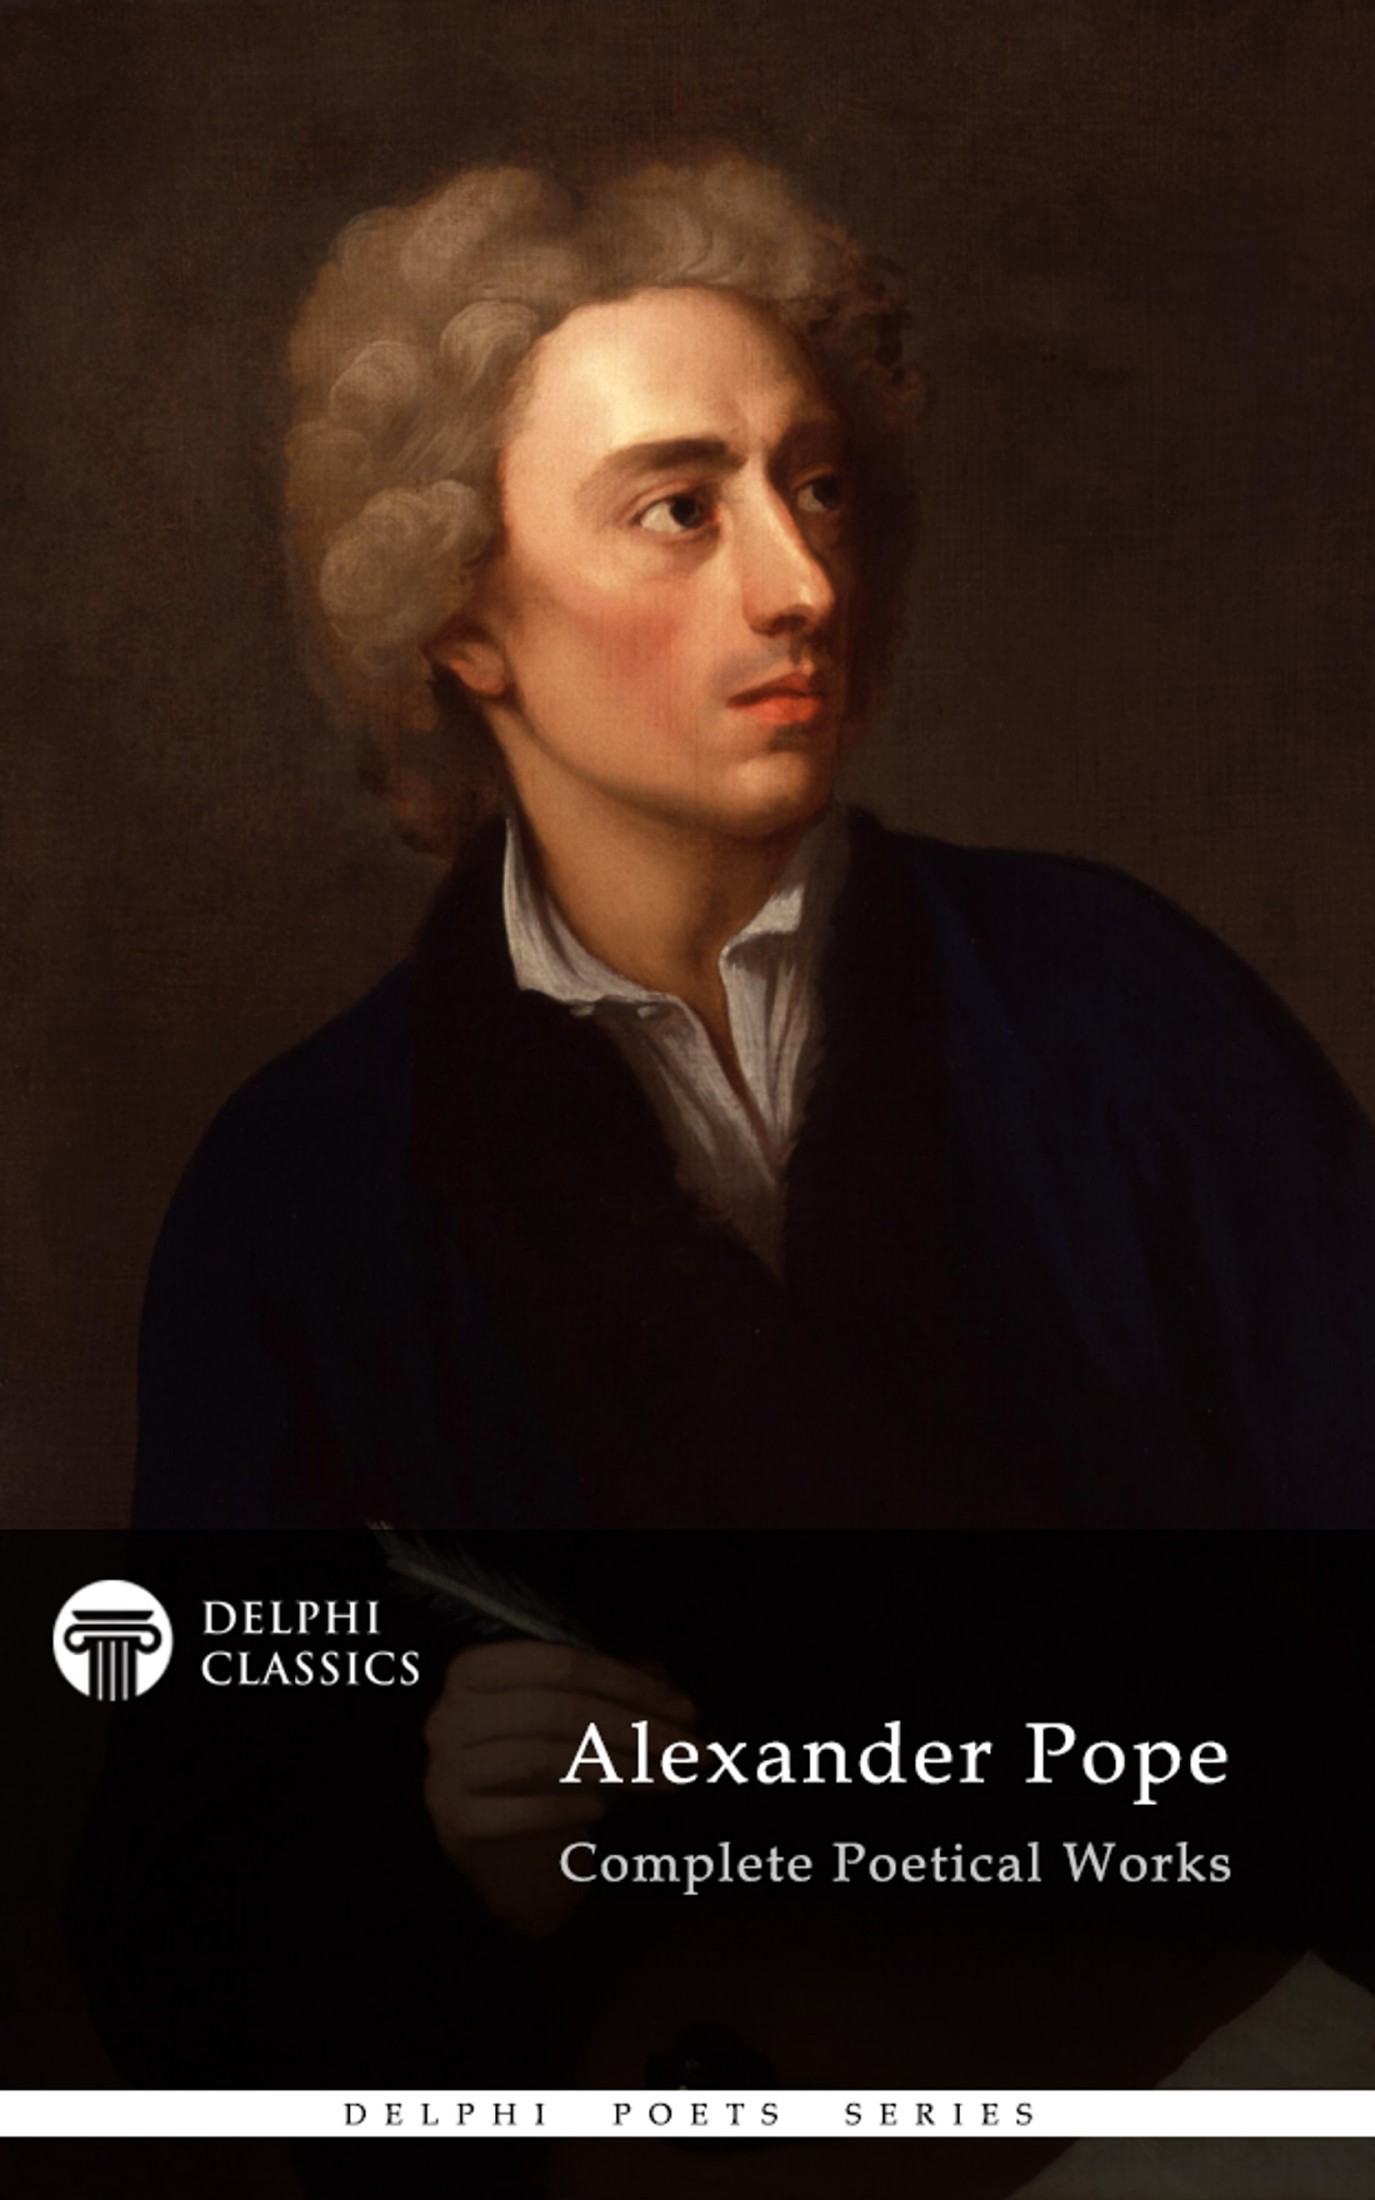 Complete Works of Alexander Pope (Delphi Classics)